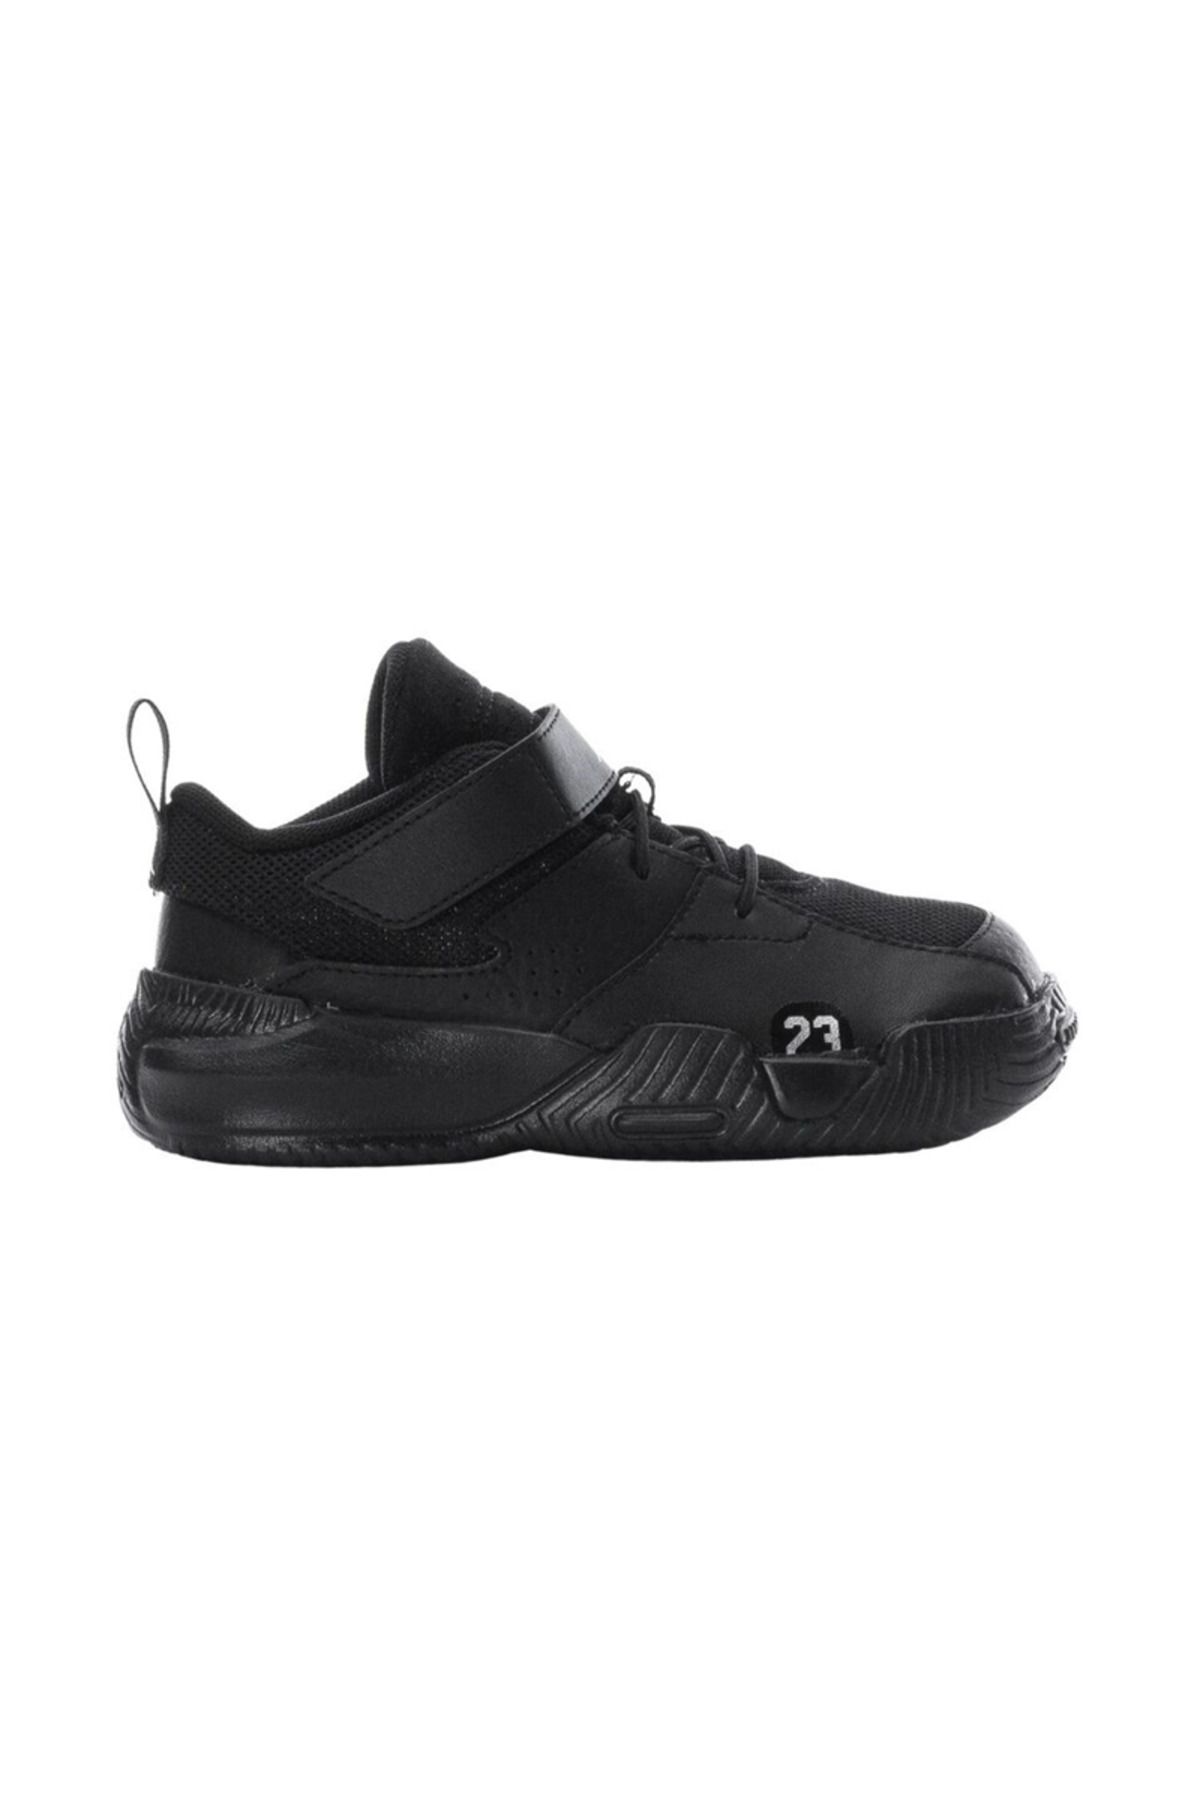 Nike Jordan Stay Loyal2 Toddlers Style : Dq8400-001